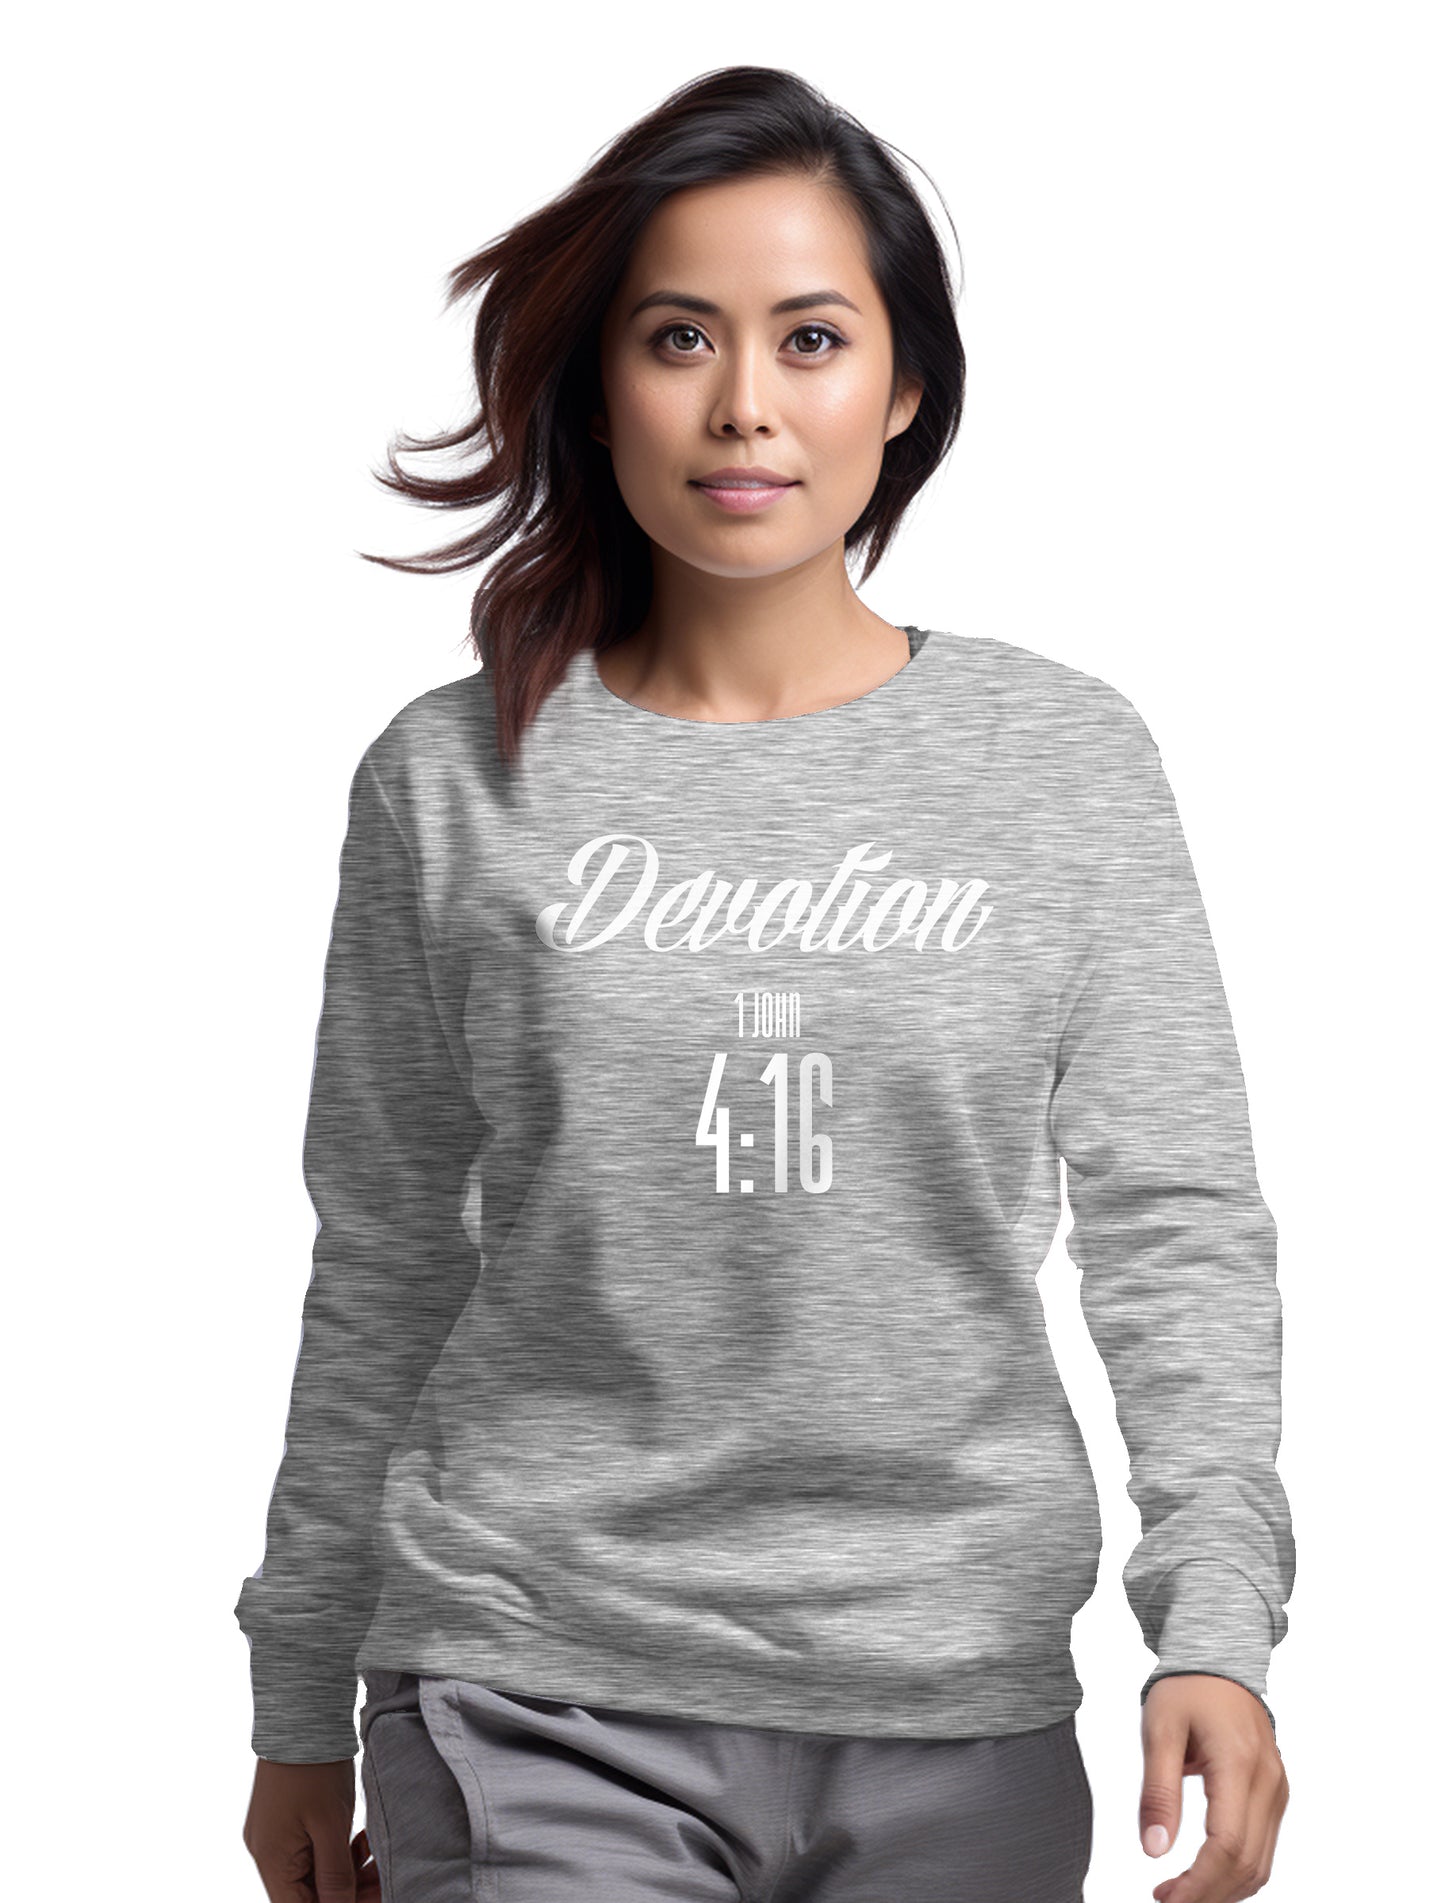 DEVOTION 1 John 4:16- Women’s premium Unisex sweatshirt